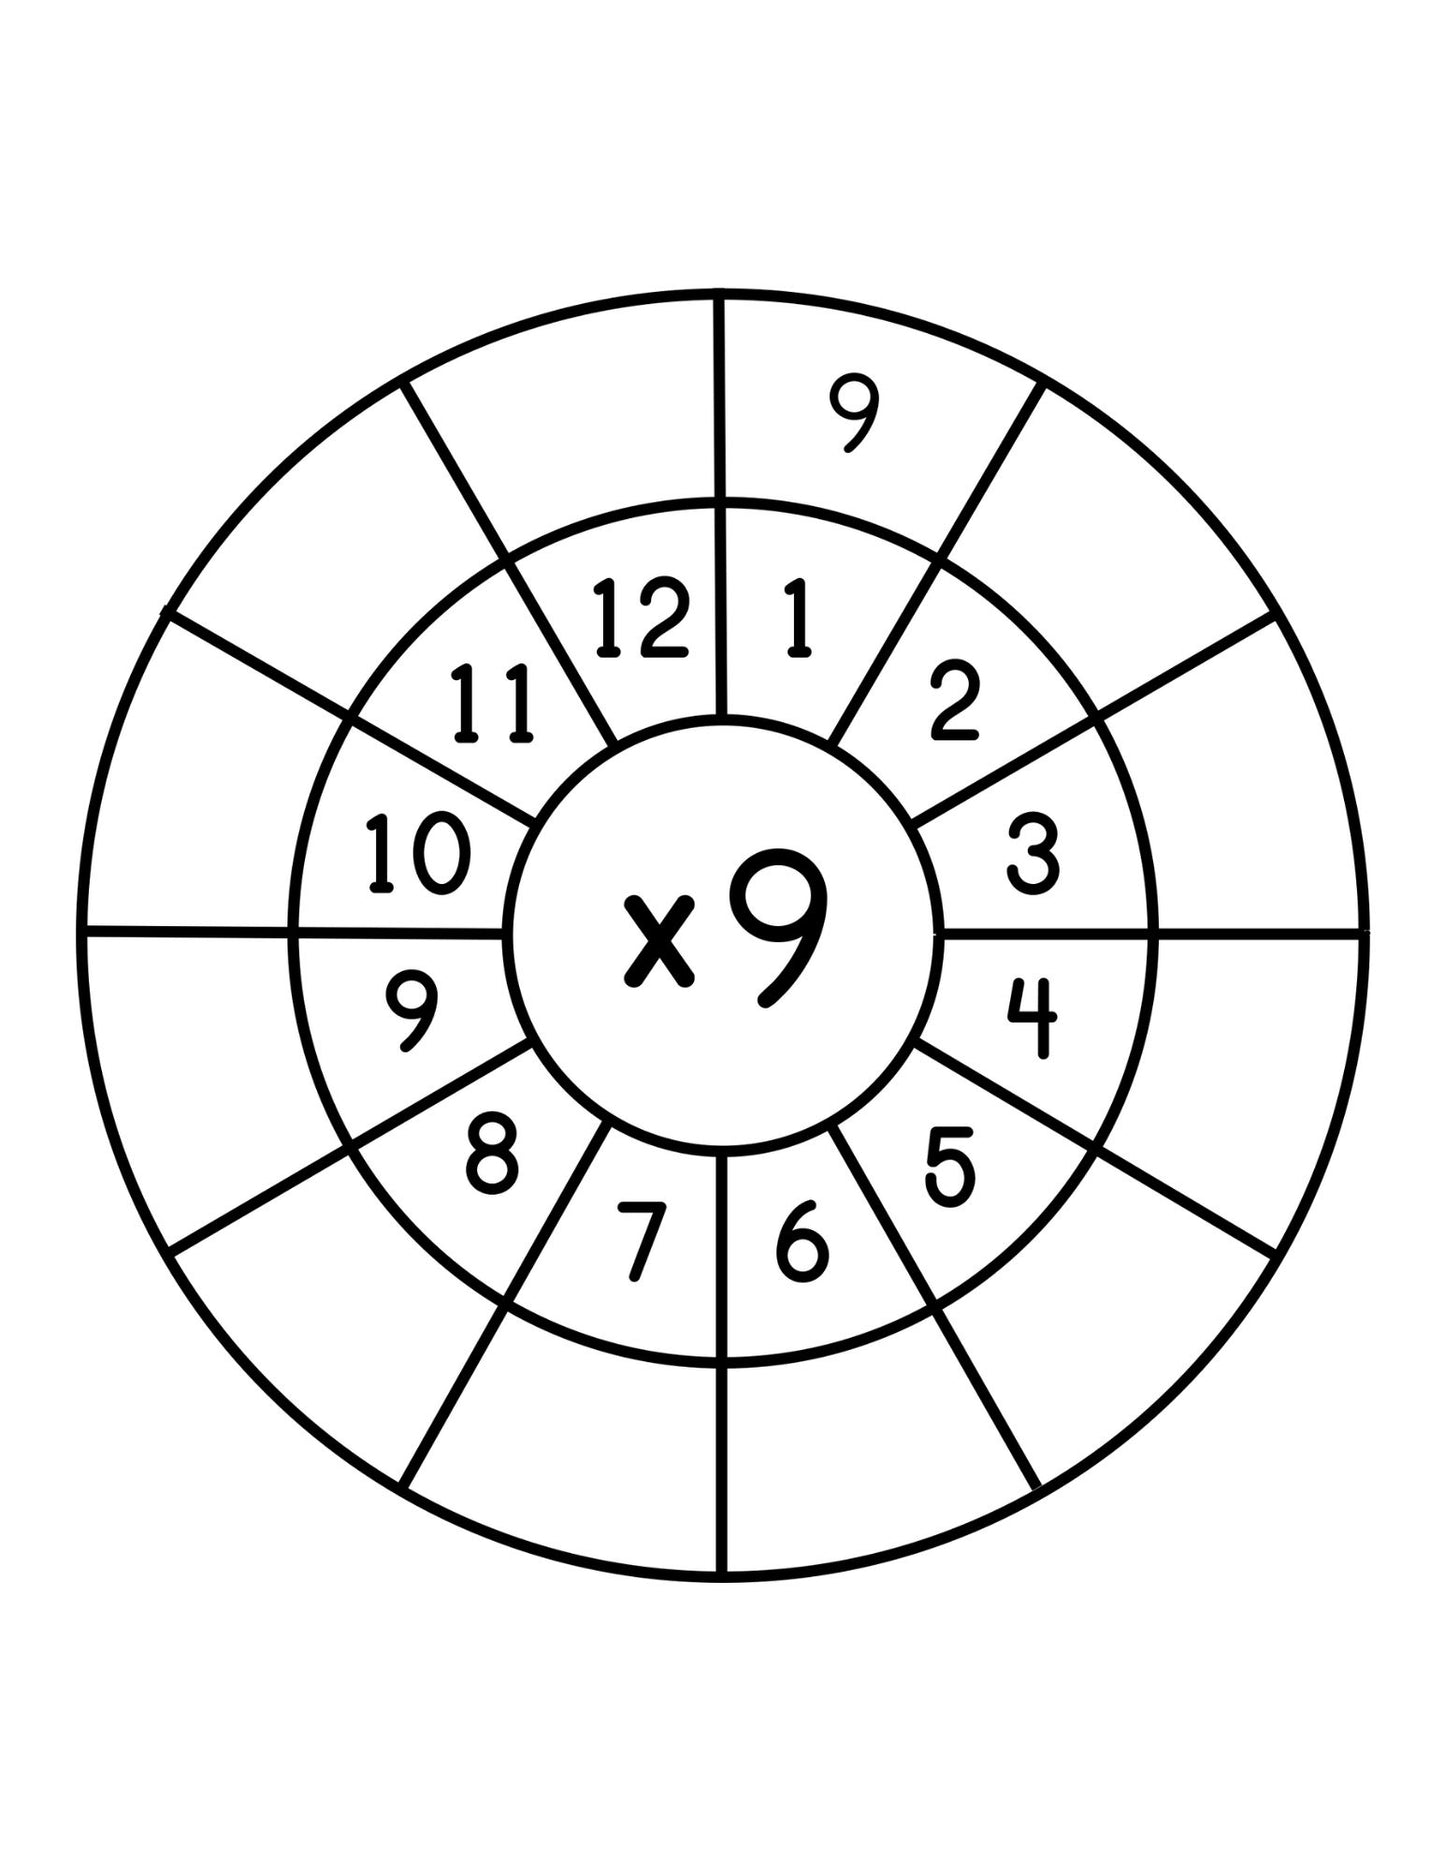 Multiplication Wheels 1-12